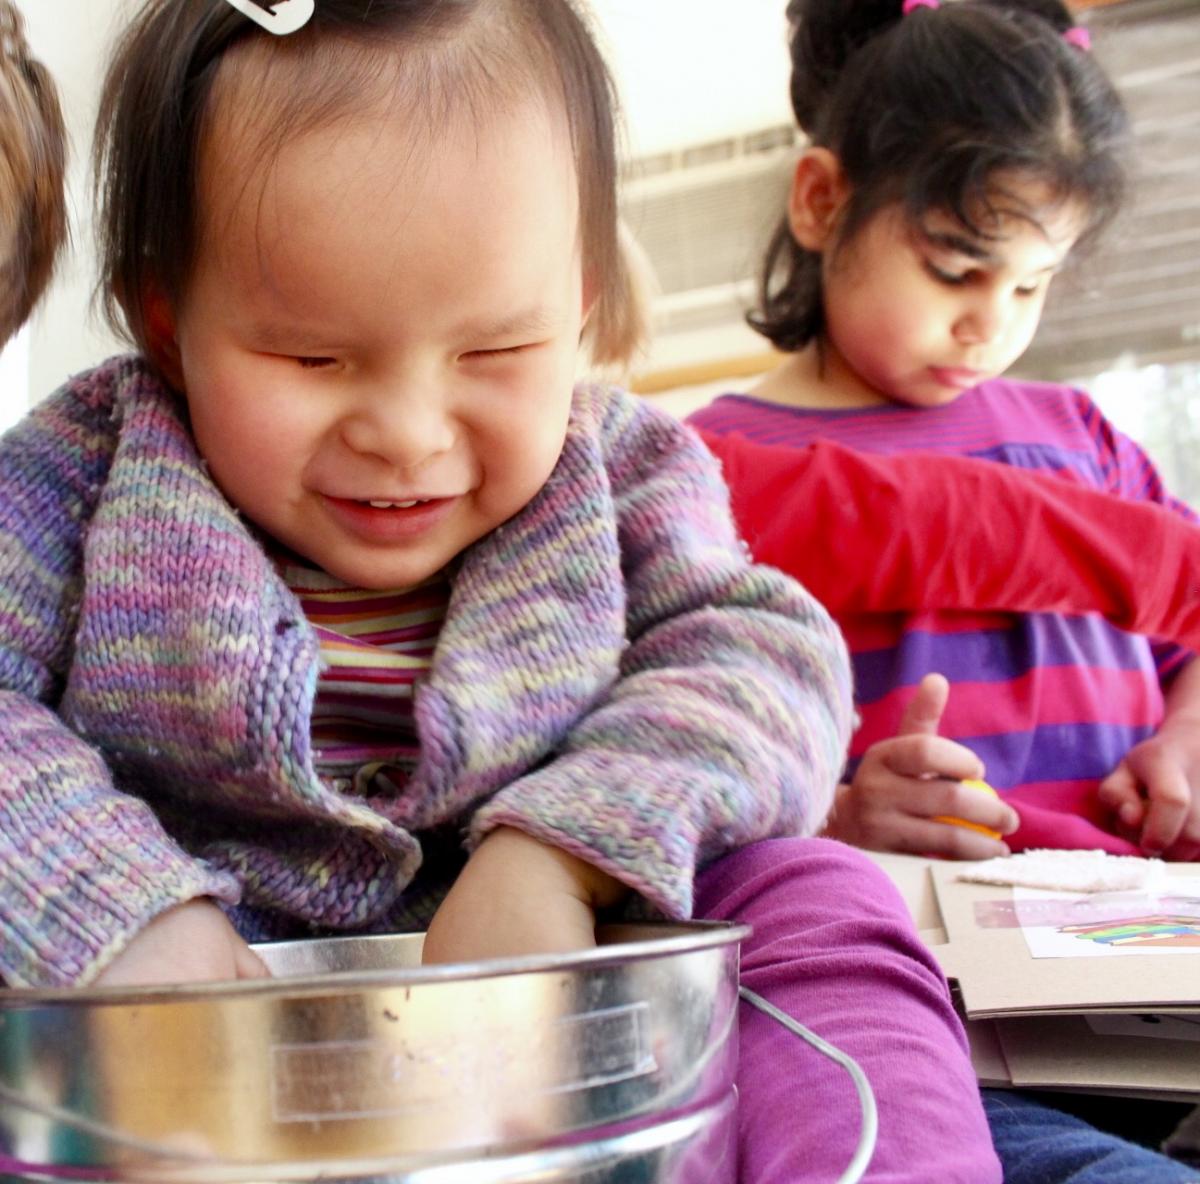 A young girl smiles as she explores tactile items.